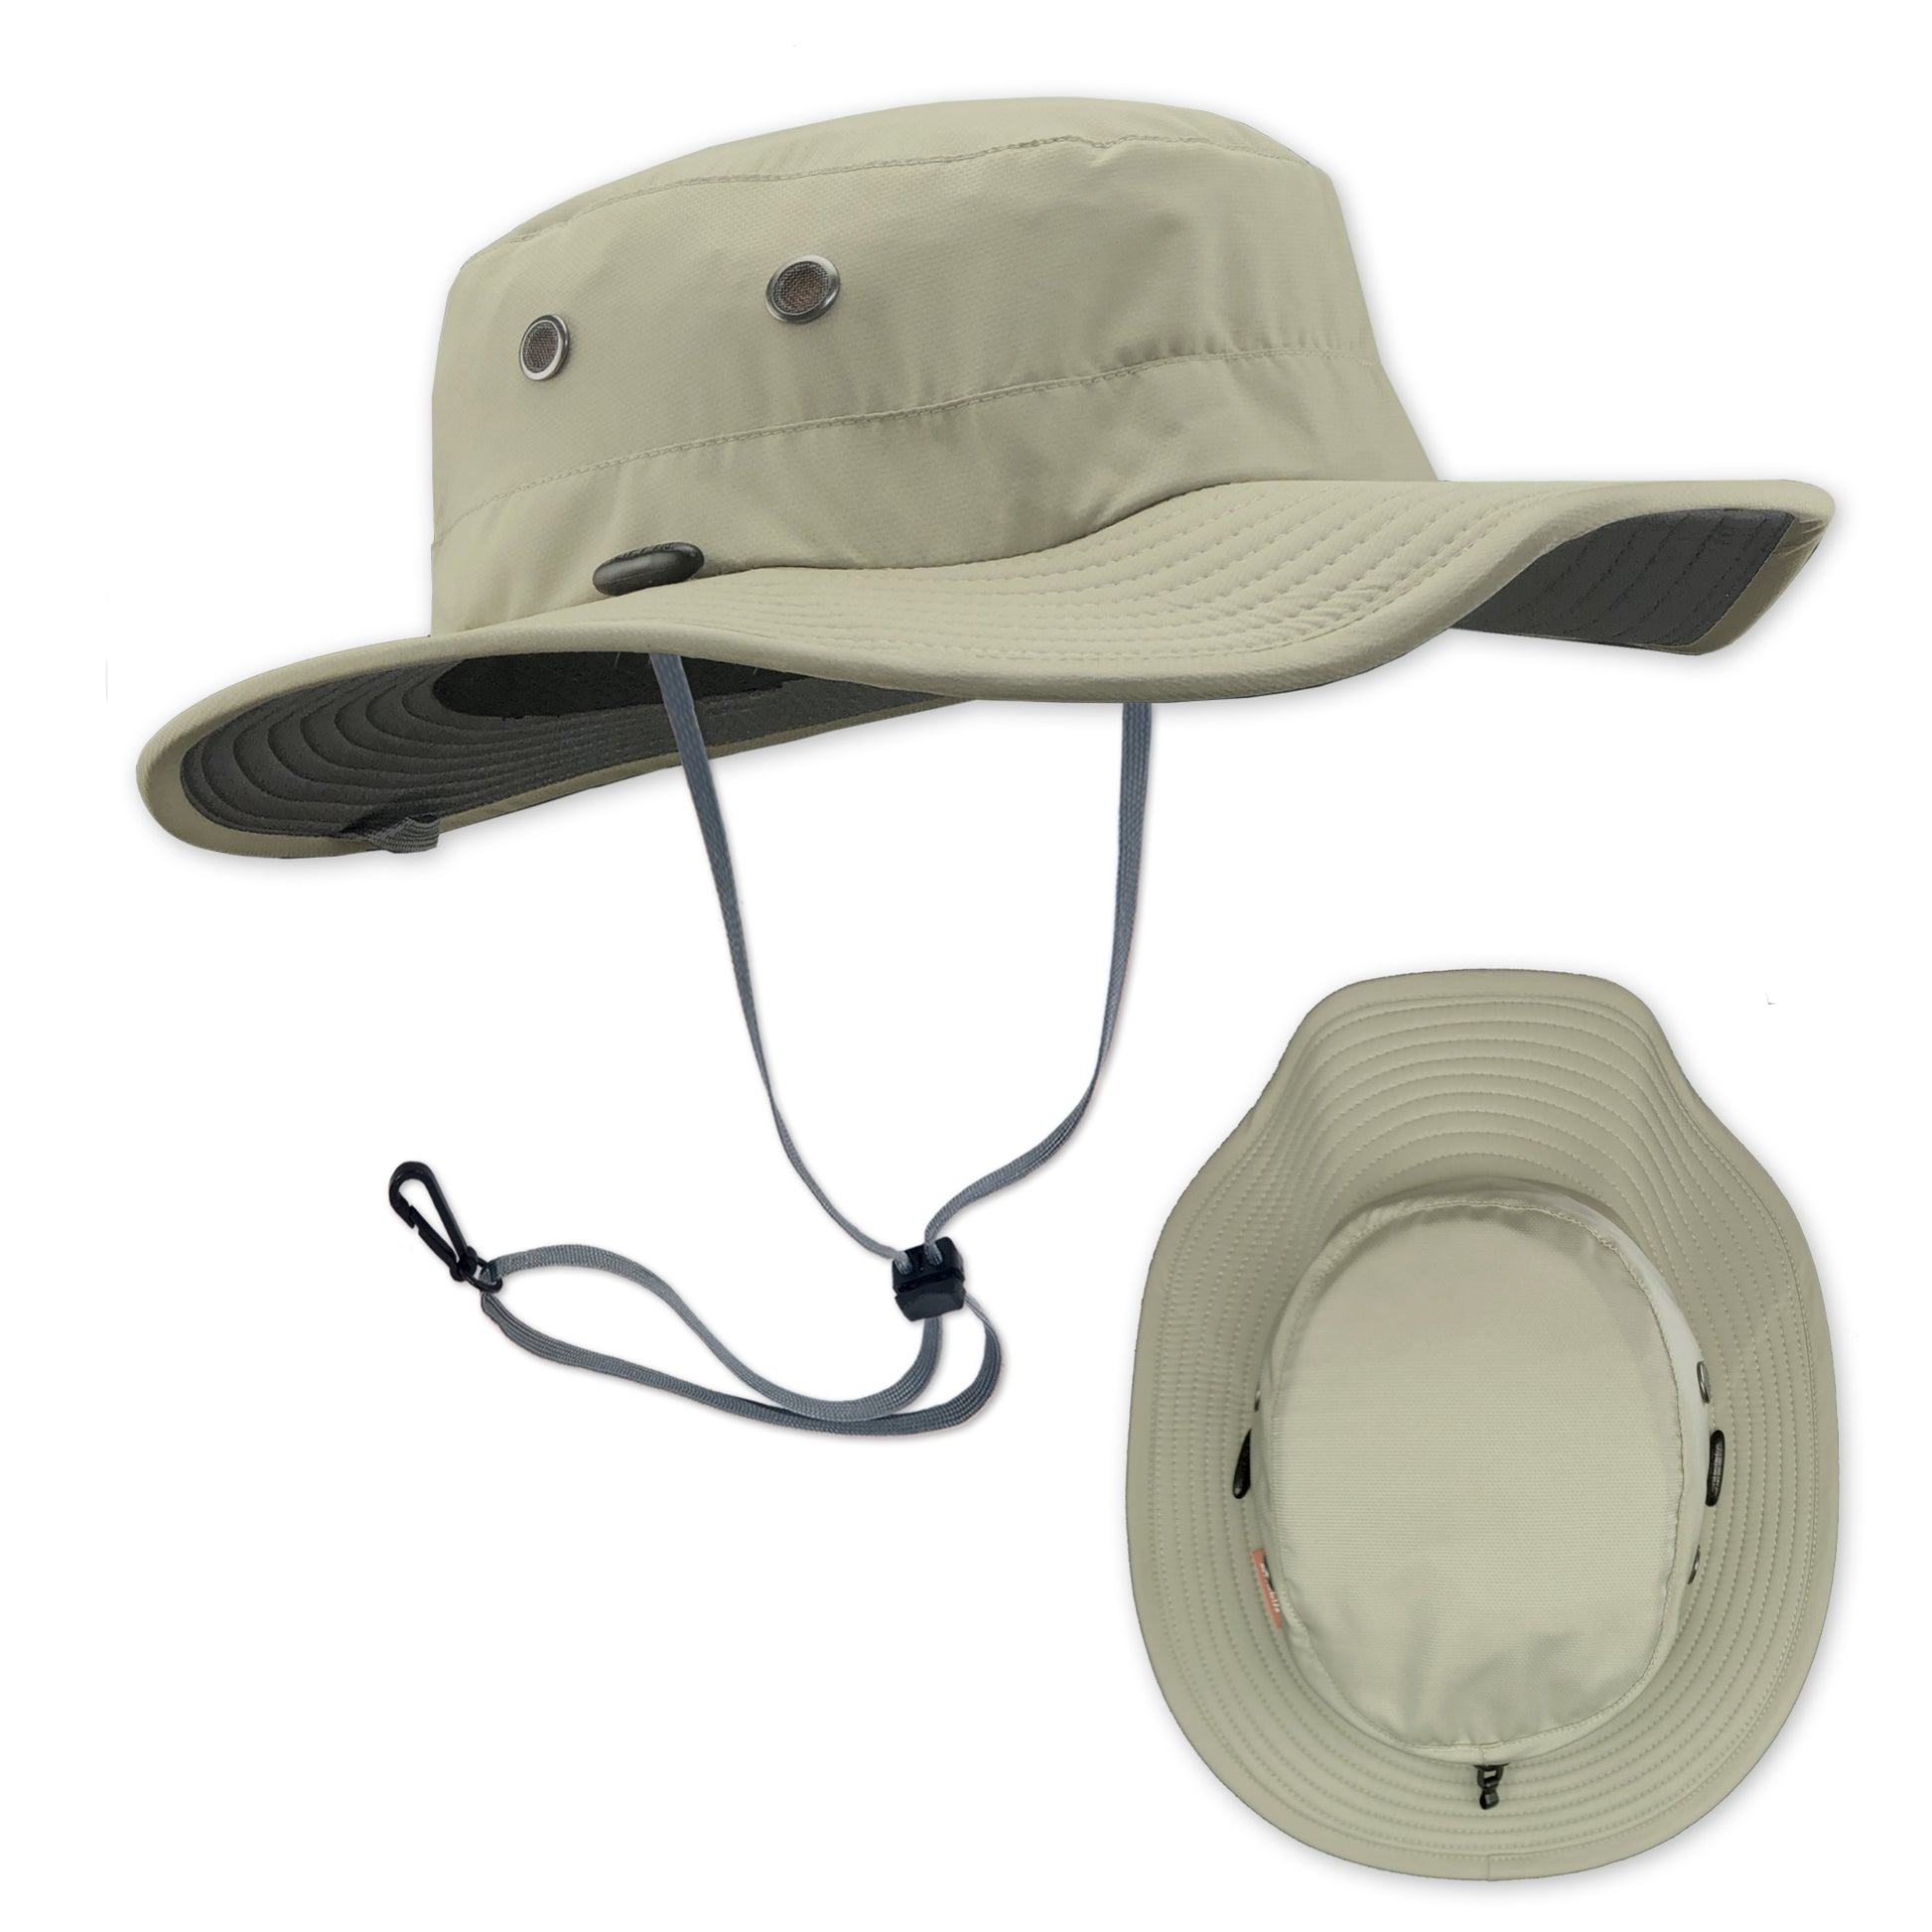 The Seahawk Mid Brim sun hat in the color Field Khaki